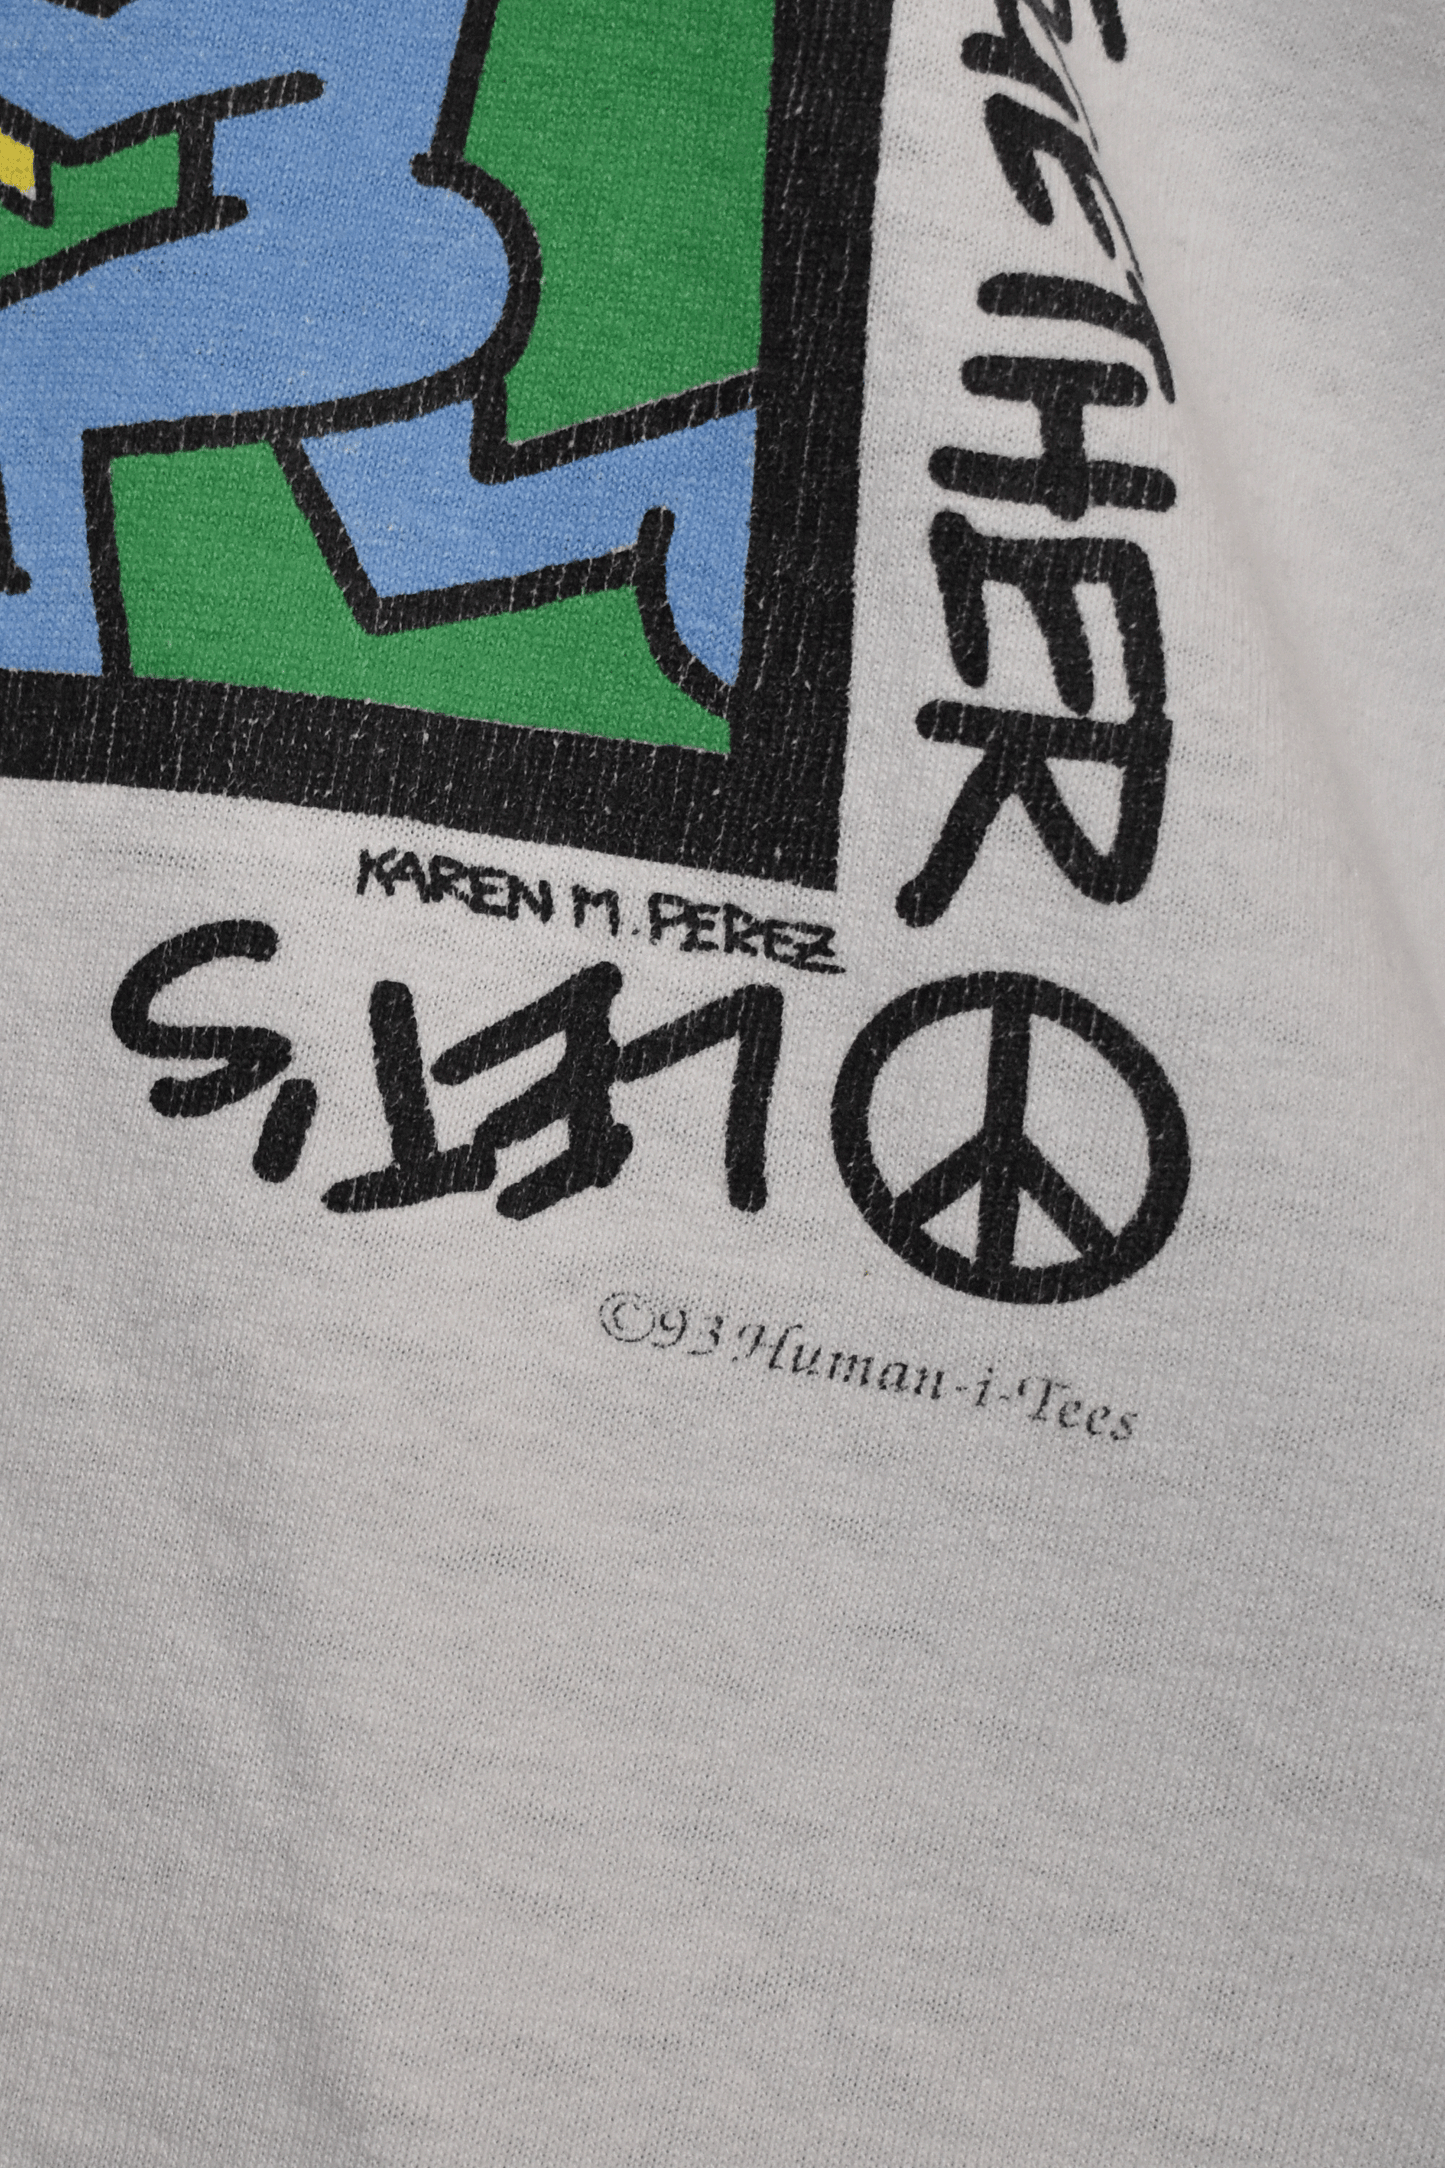 Vintage 1993 Let's Peace It Together T-shirt